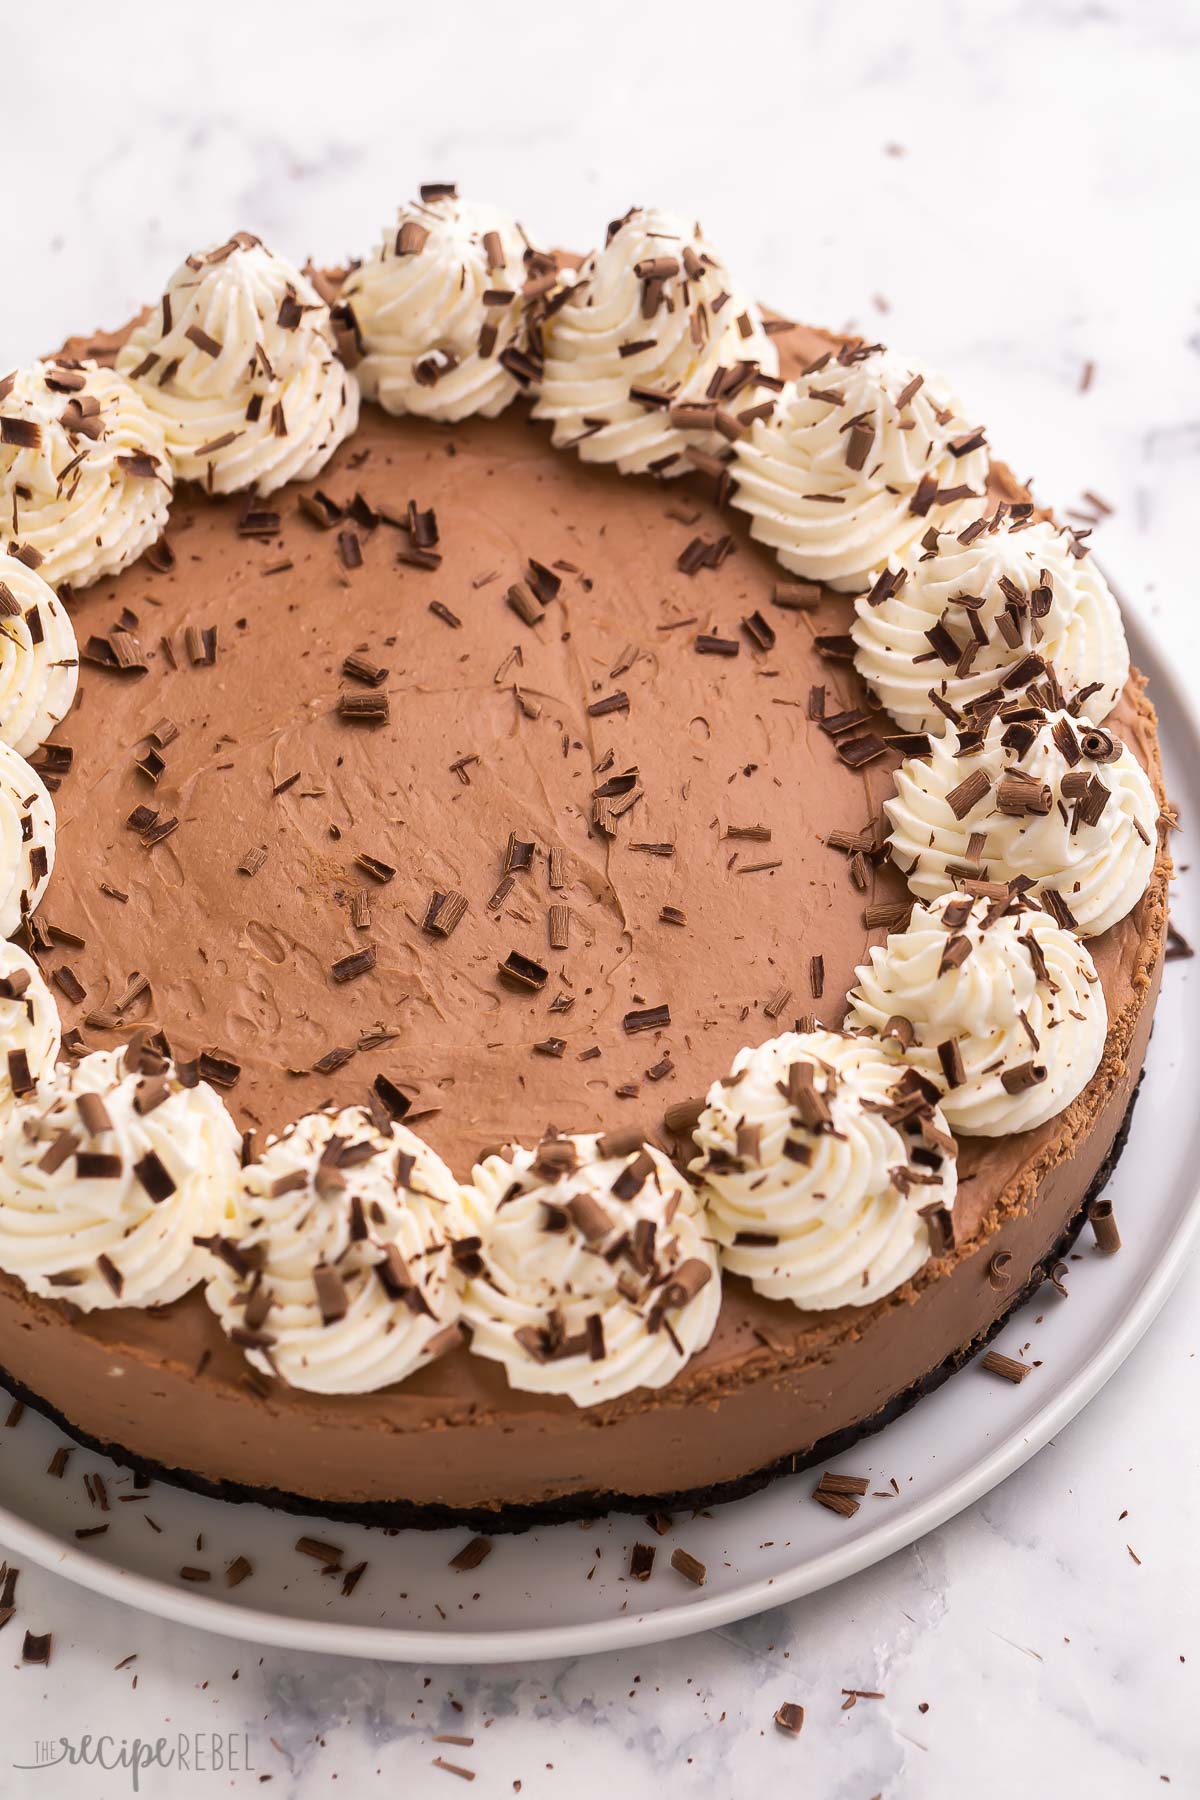 no bake chocolate cheesecake with whipped cream and chocolate shavings.